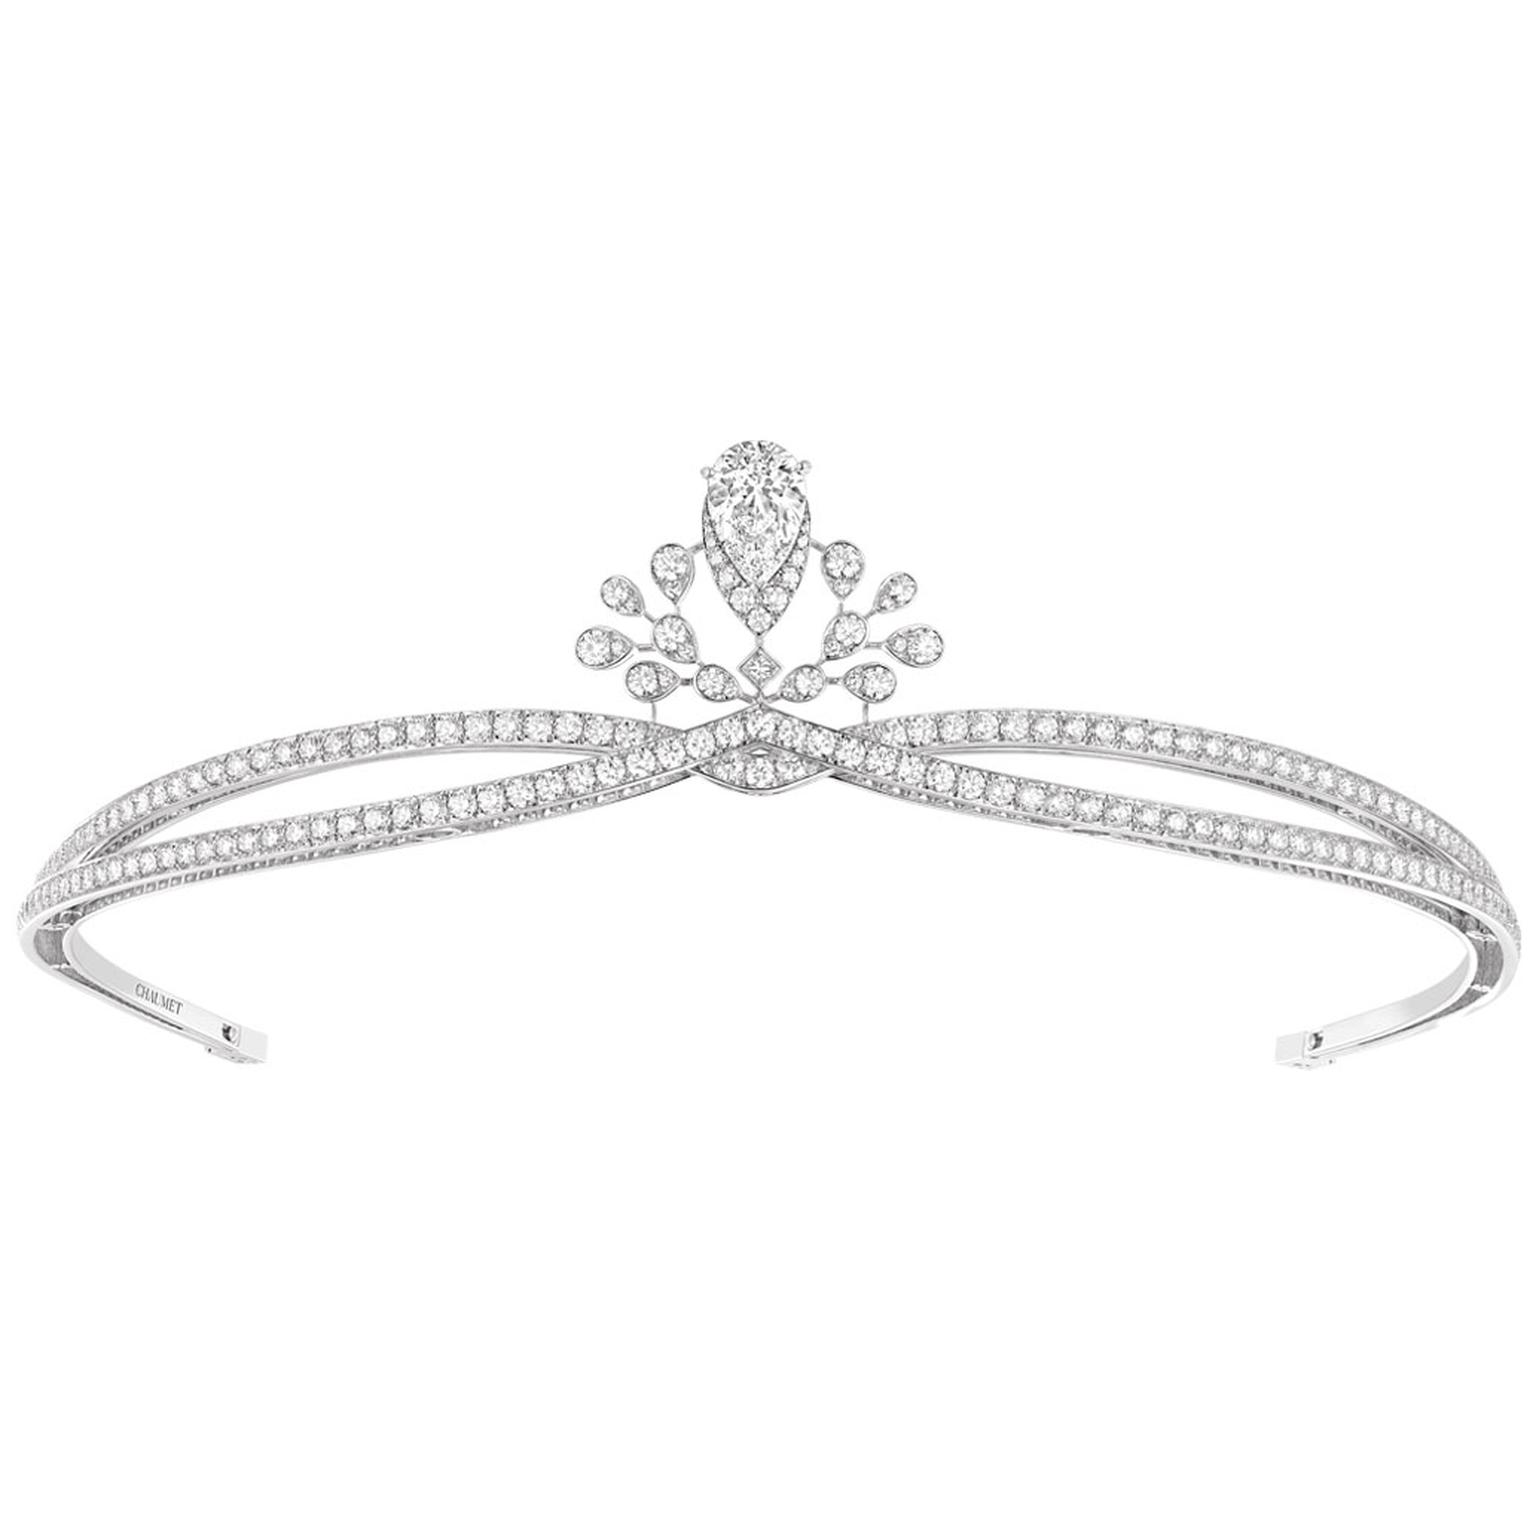 Chaumet Joséphine Aigrette Imperiale diamond tiara